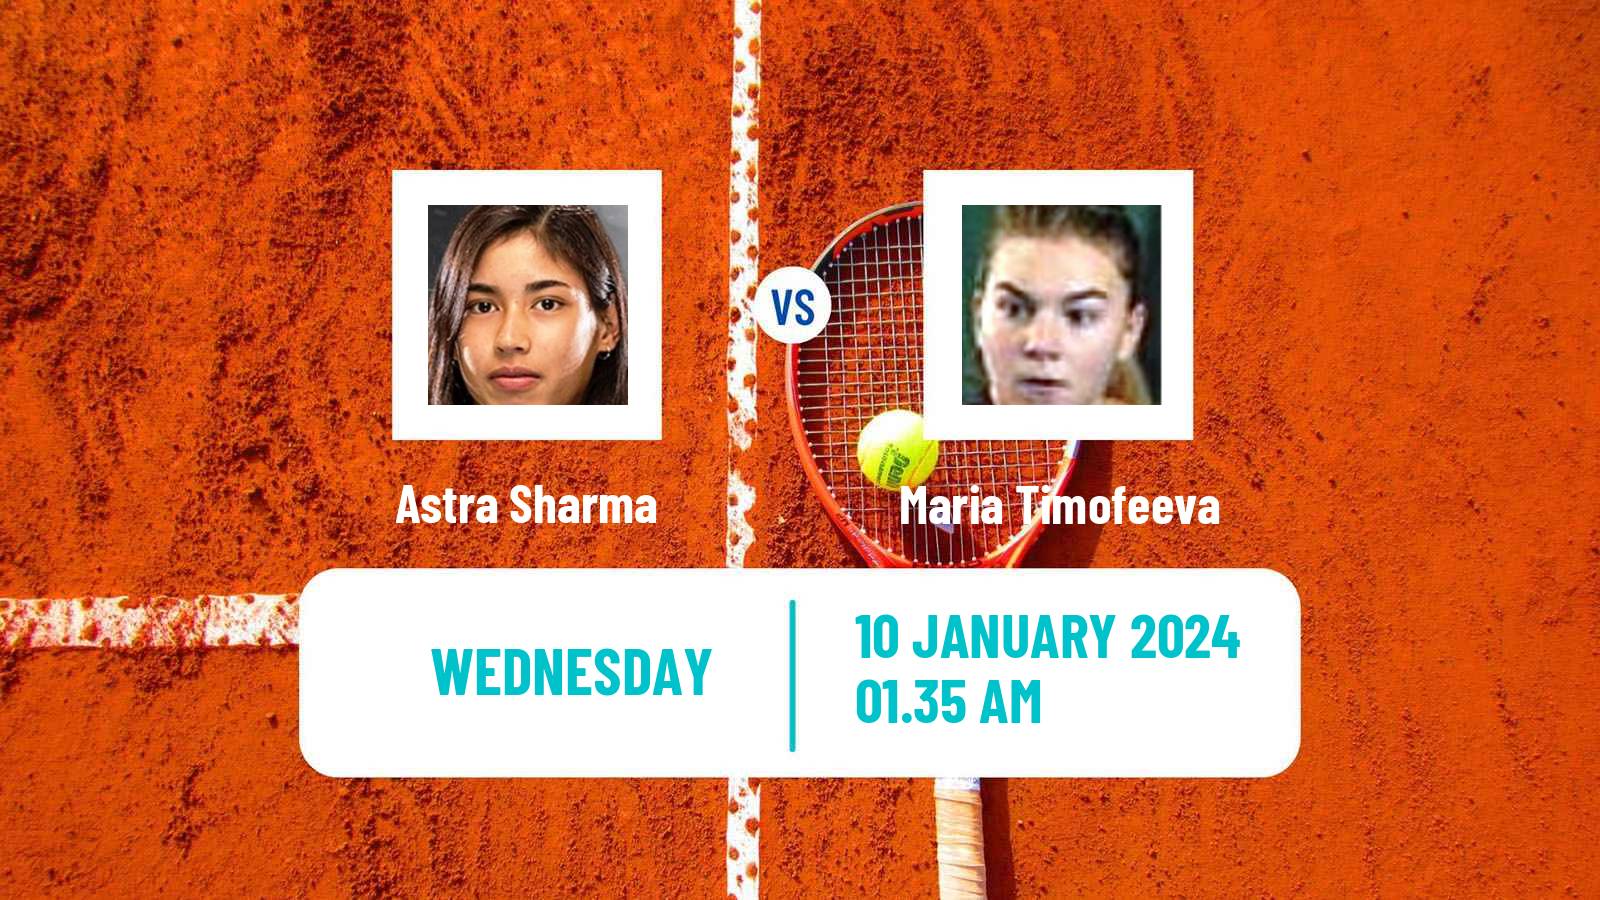 Tennis WTA Australian Open Astra Sharma - Maria Timofeeva